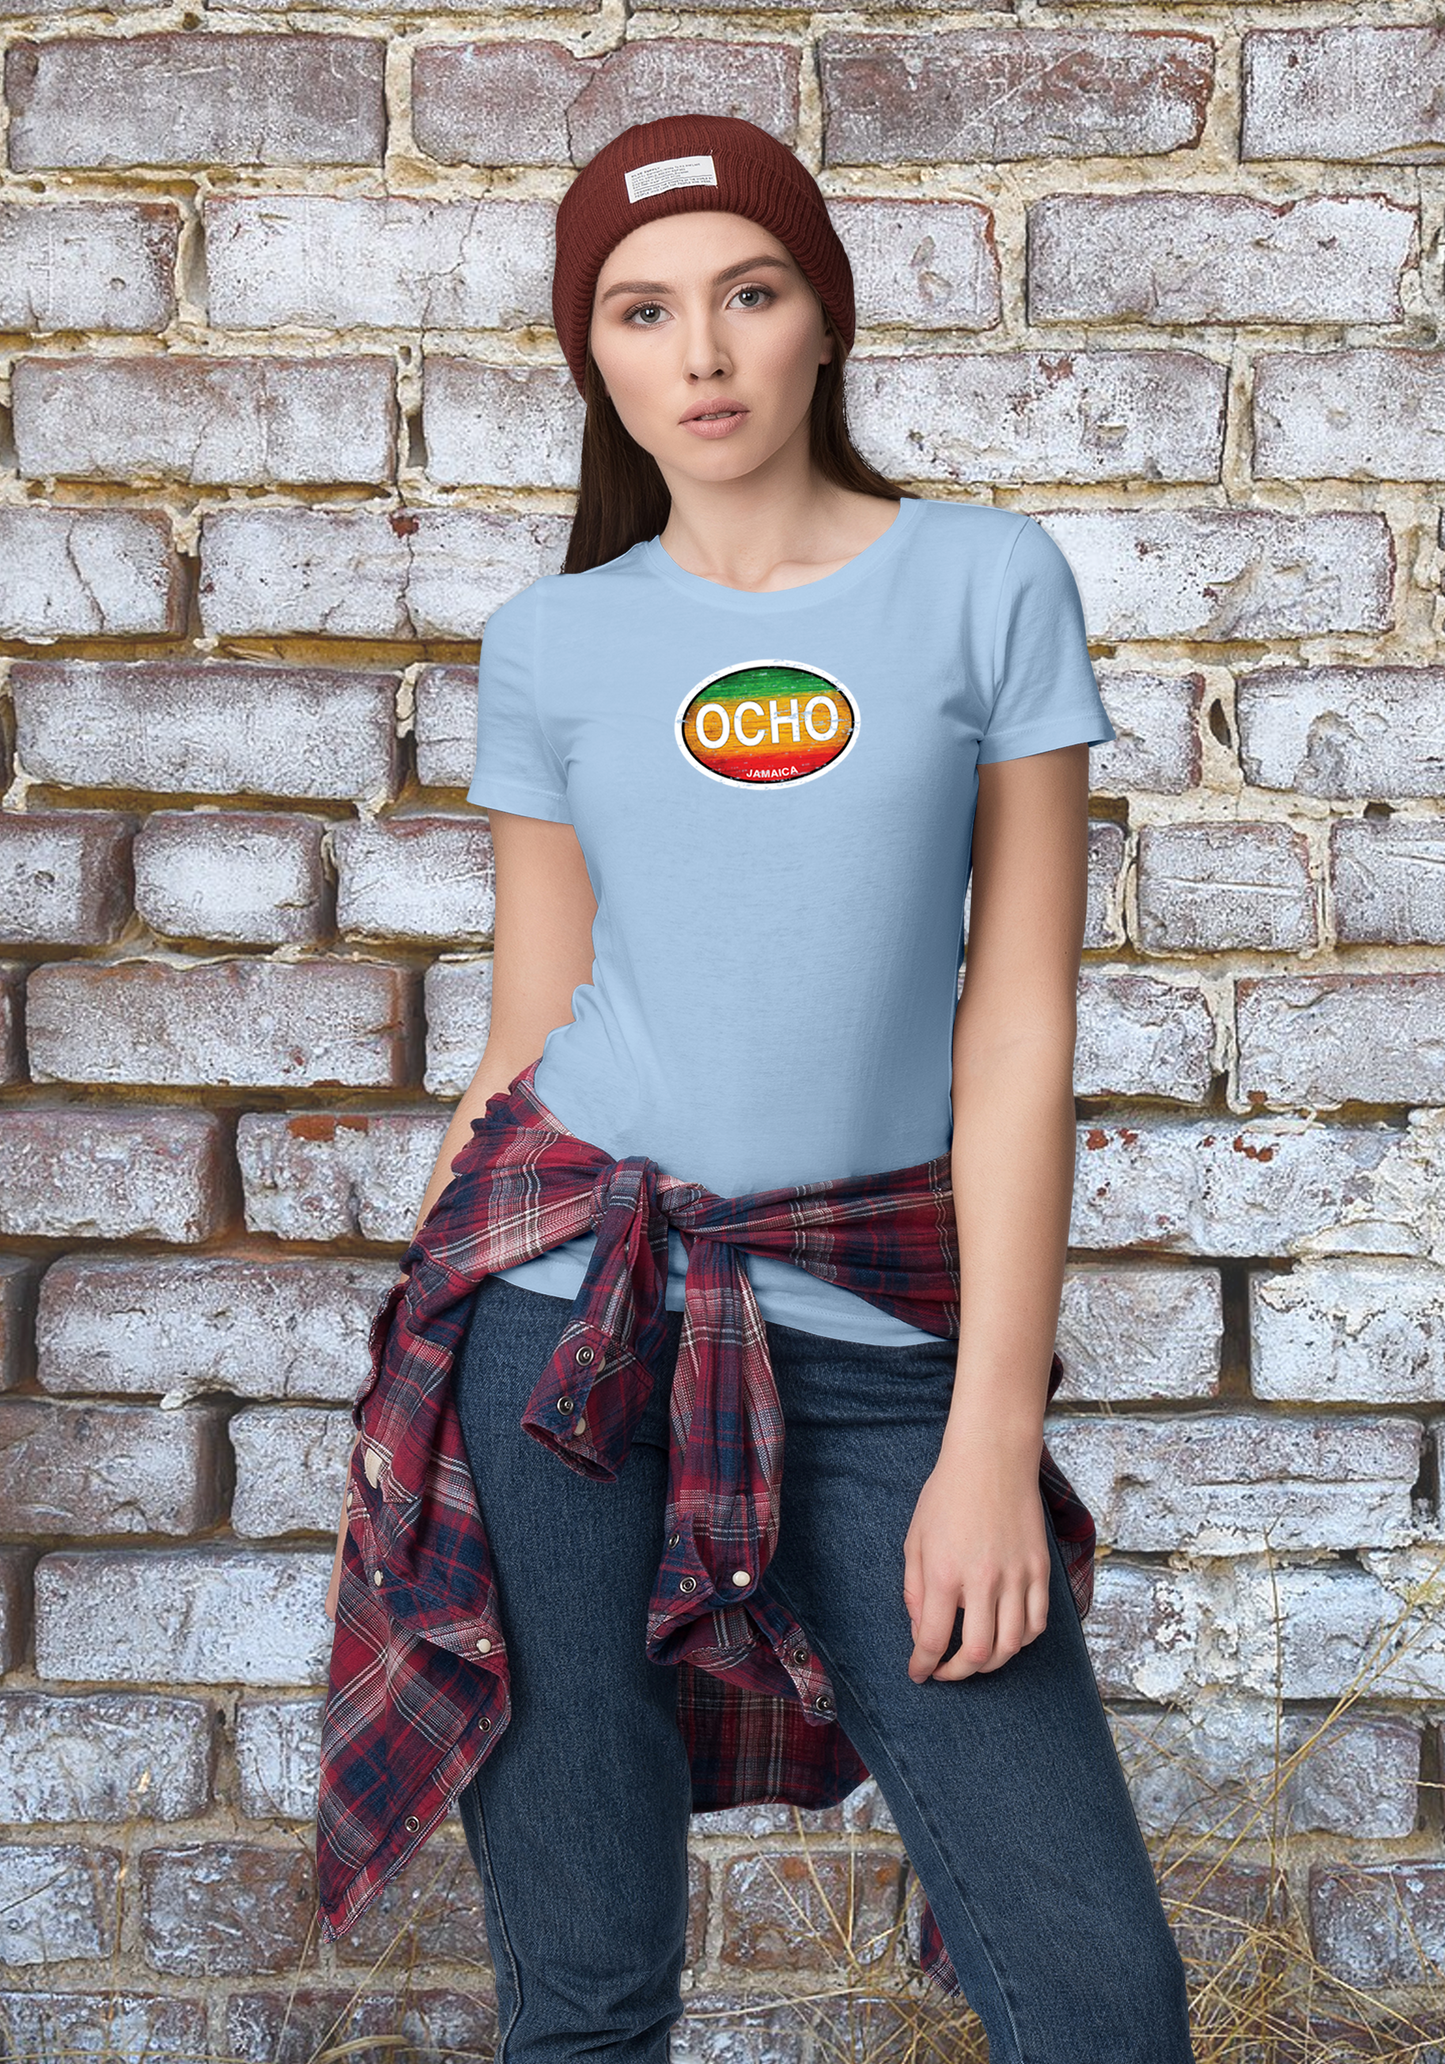 Ocho Rios Women's Rasta T-Shirt Souvenirs - My Destination Location